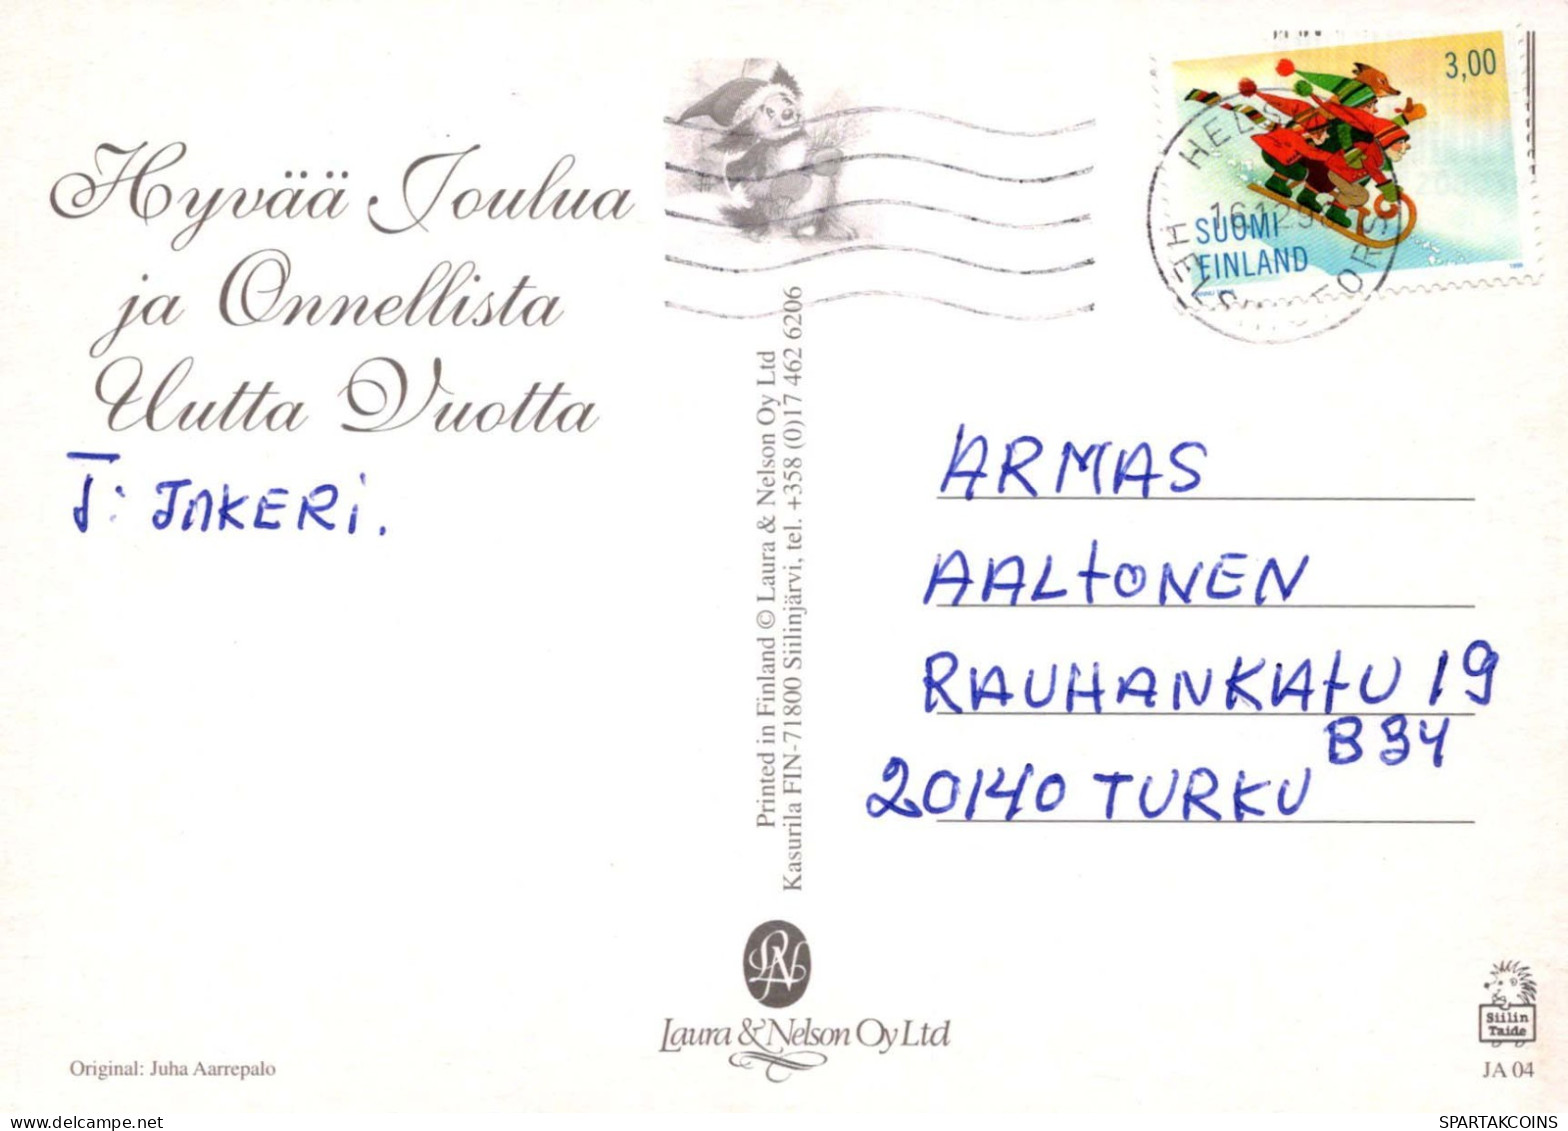 Feliz Año Navidad MUÑECO DE NIEVE Vintage Tarjeta Postal CPSM #PAZ796.A - Neujahr